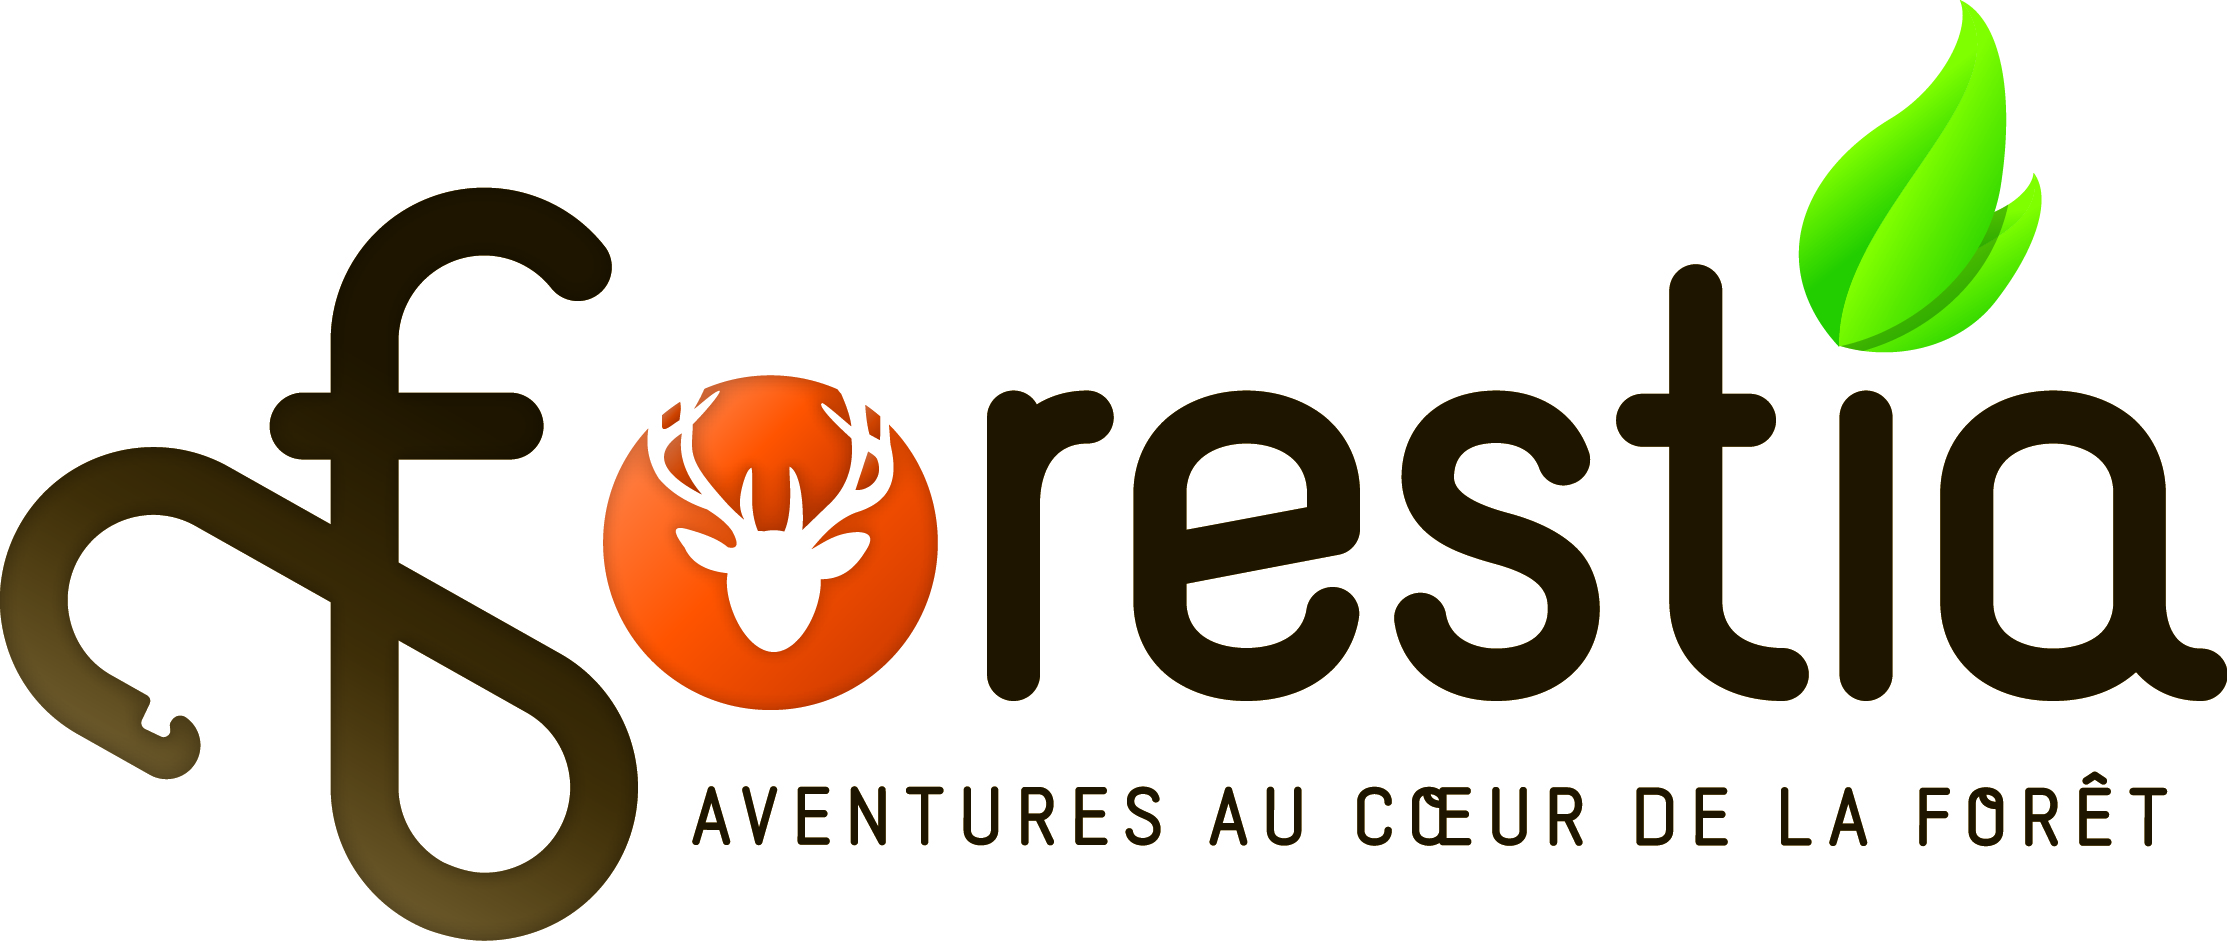 Forestia Animal and Adventure Park